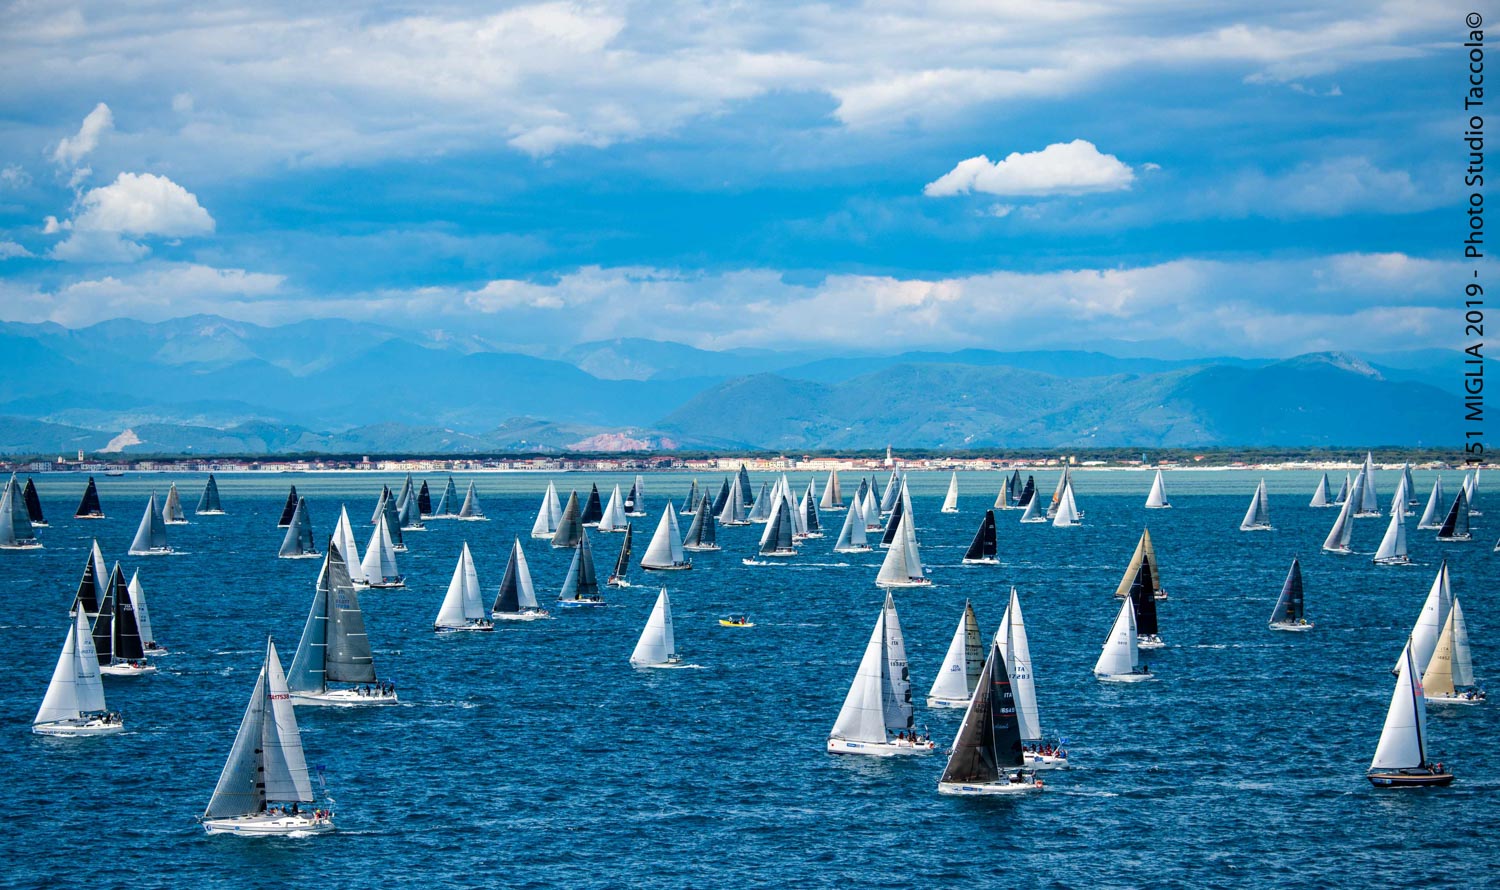 YCCS Members at 151 Miglia regatta - NEWS - Yacht Club Costa Smeralda